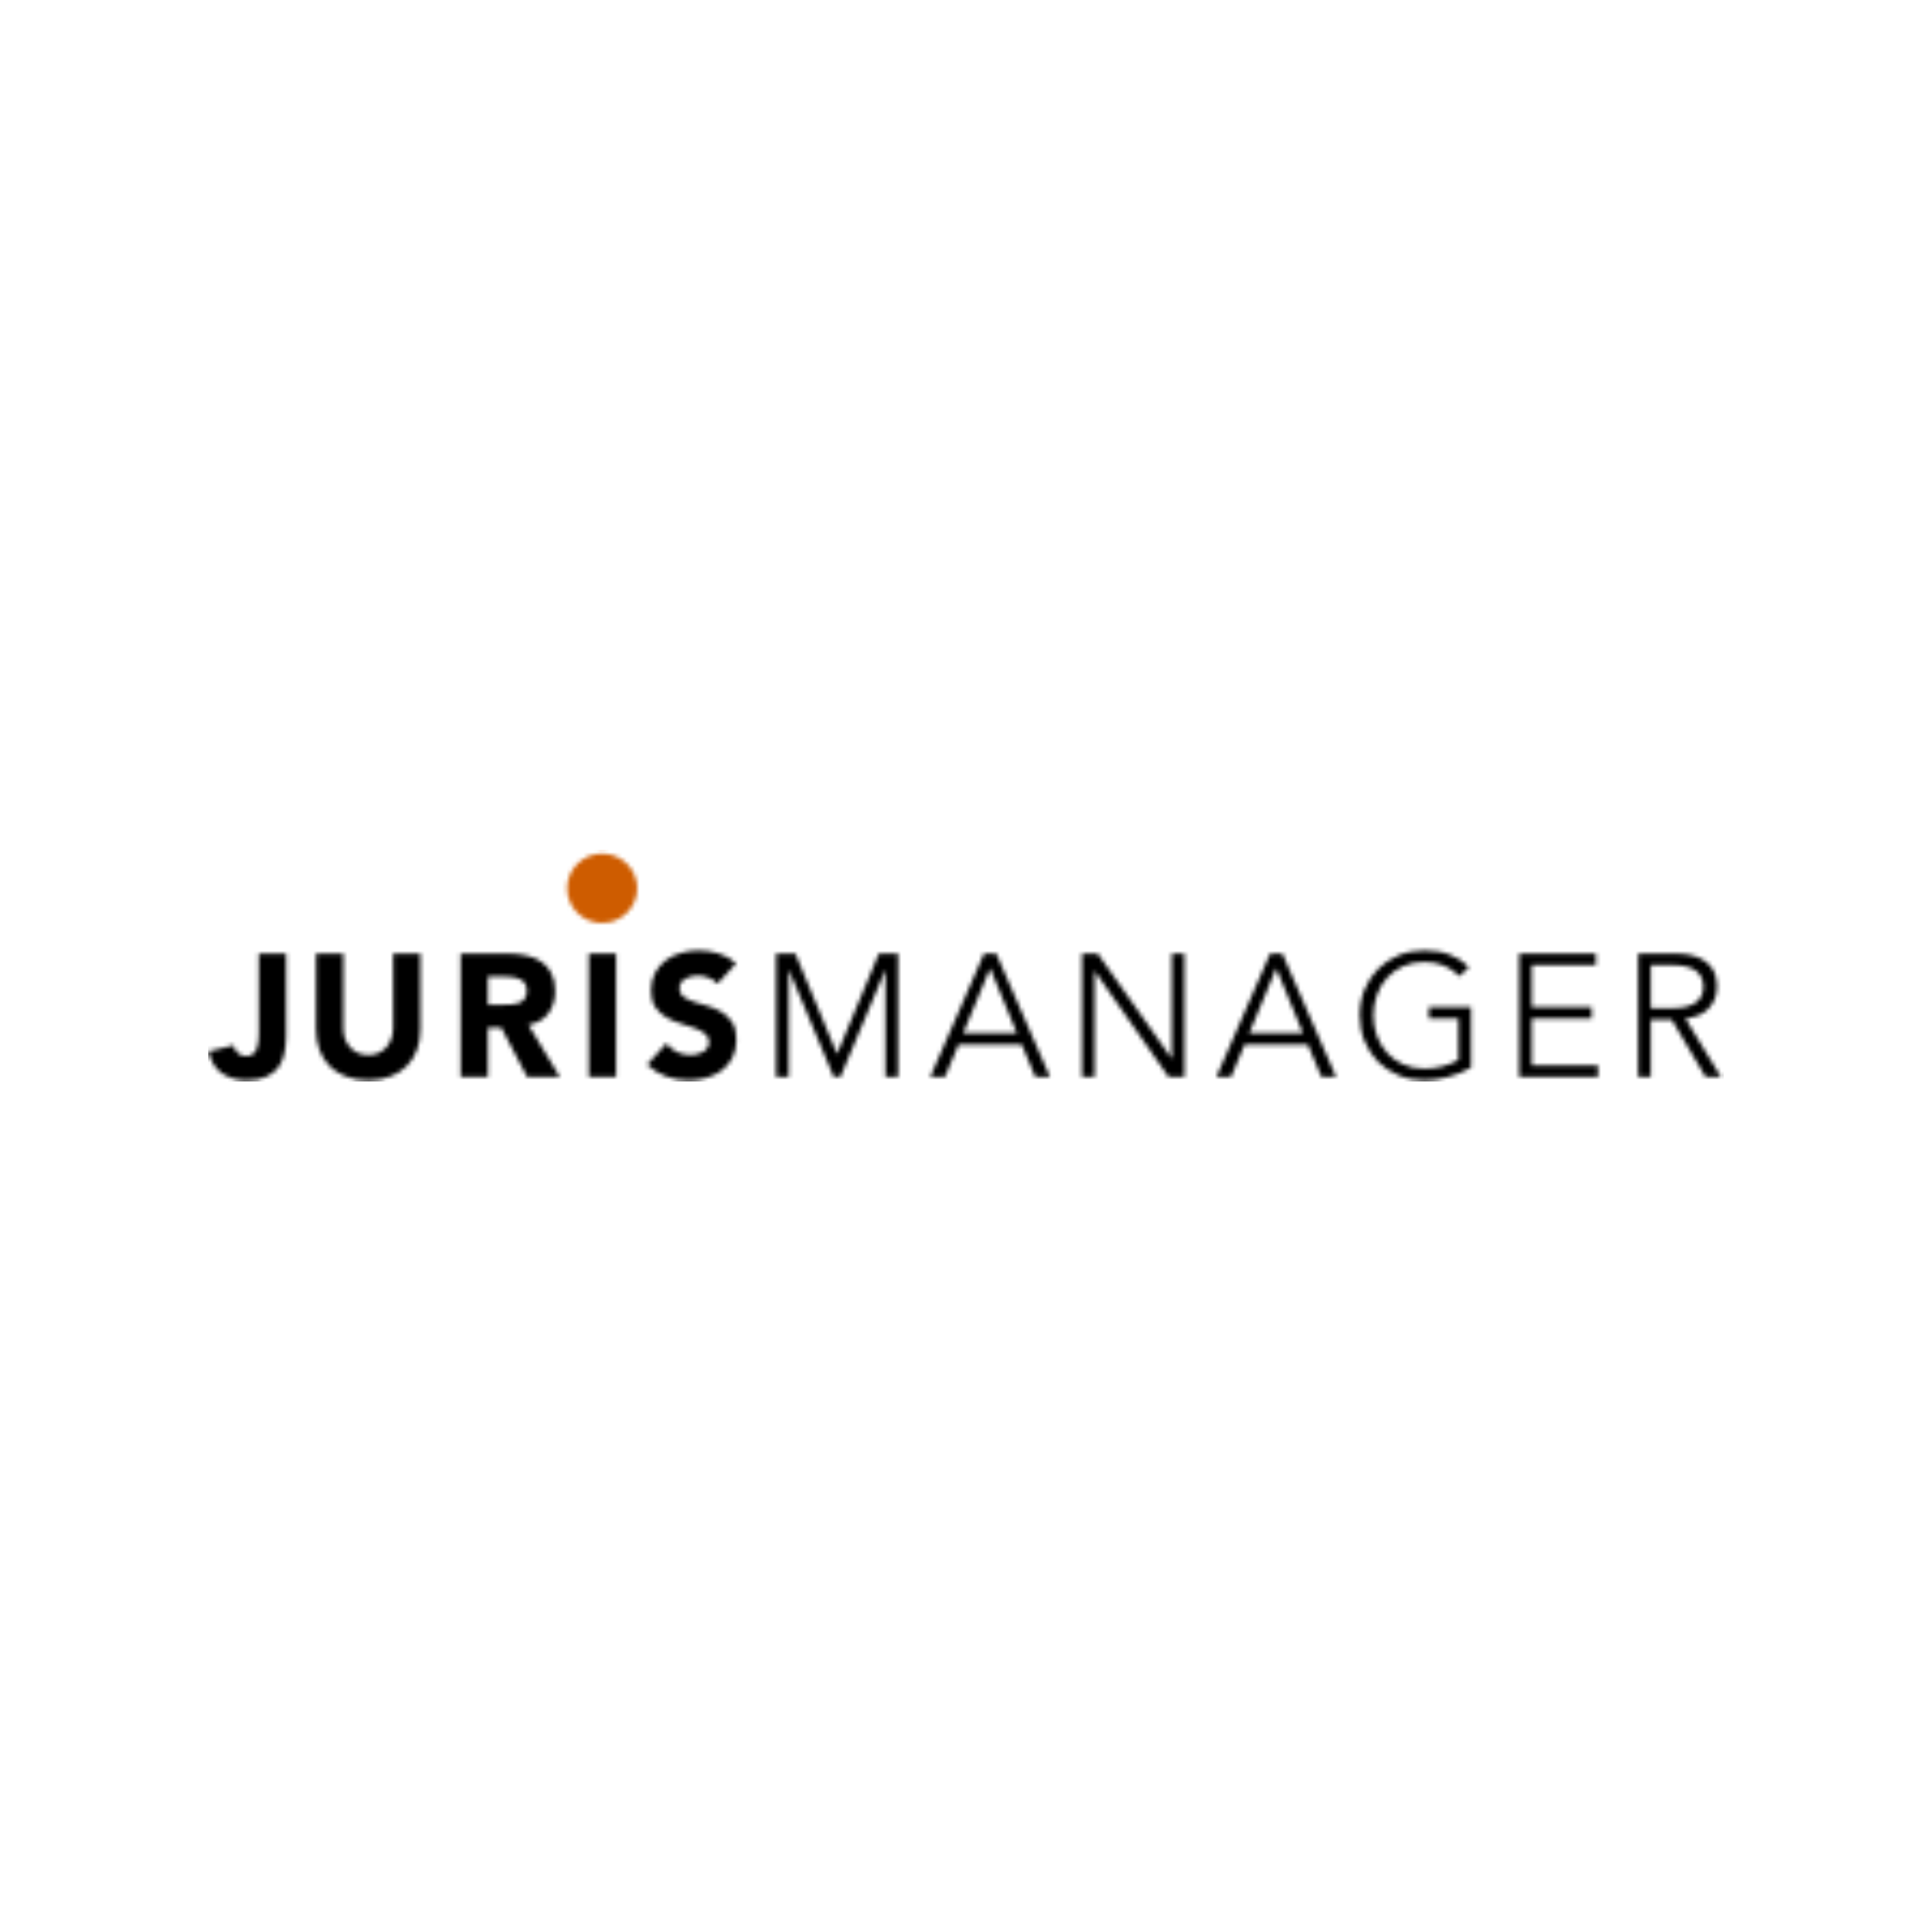 08-jurismanager_logo